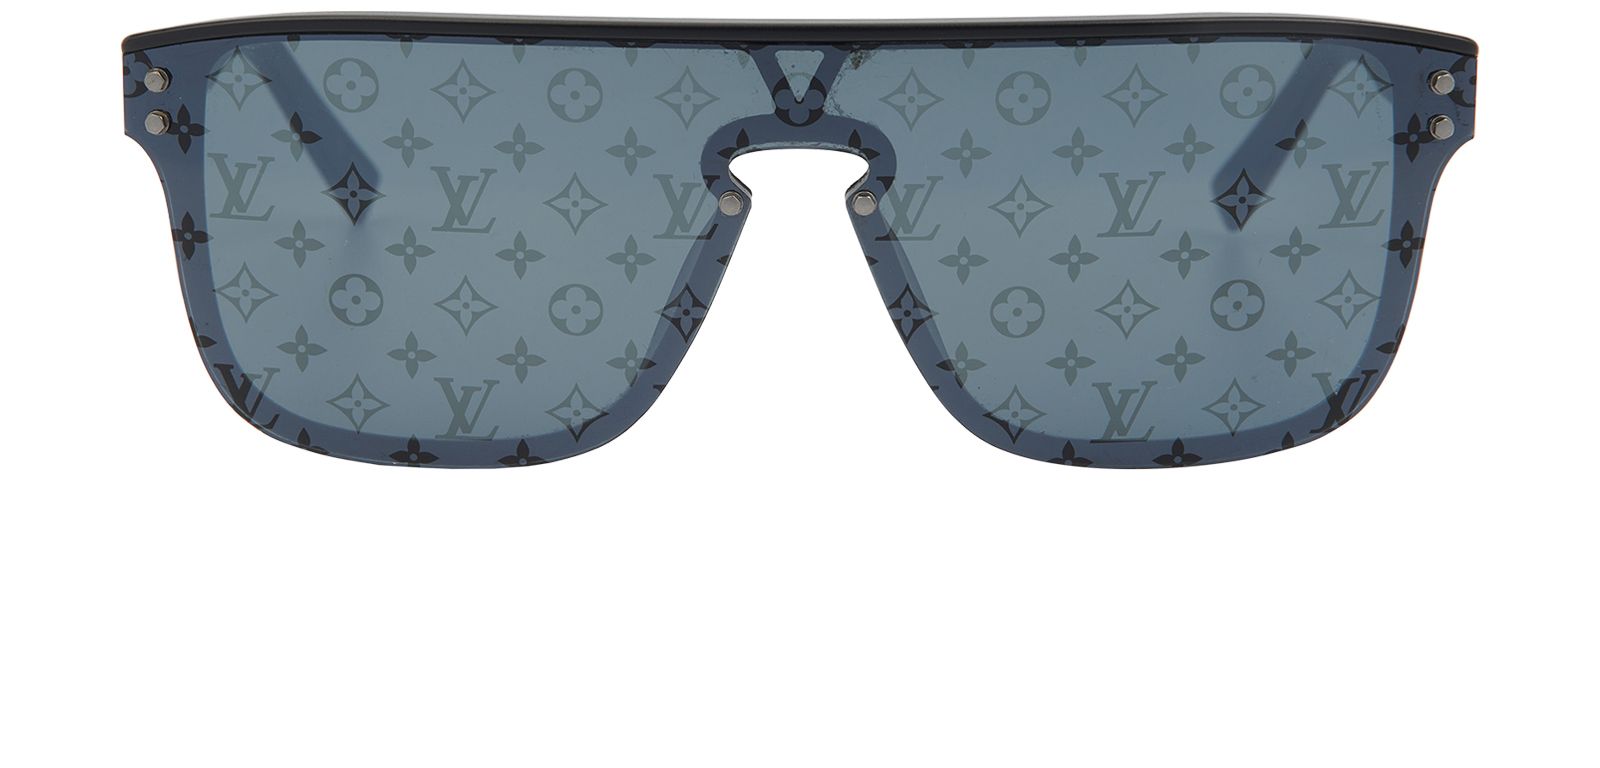 Louis Vuitton Louis Vuitton LV WAIMEA SUNGLASSES  Louis vuitton sunglasses,  Louis vuitton, Sunglasses